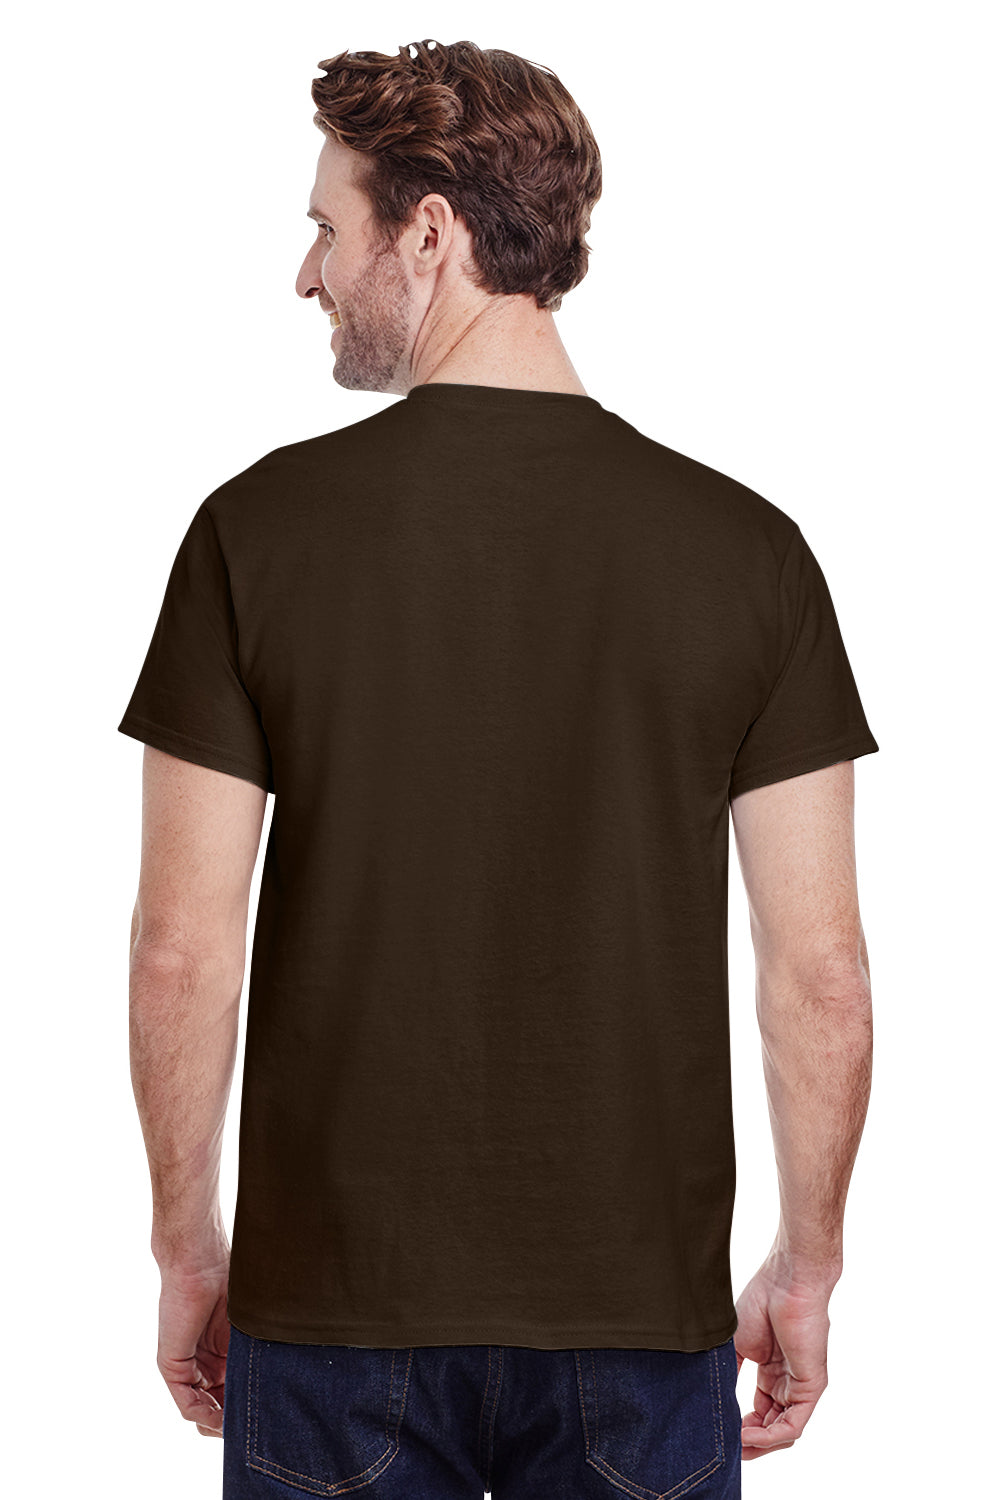 Gildan G200 Mens Ultra Short Sleeve Crewneck T-Shirt Chocolate Brown Back